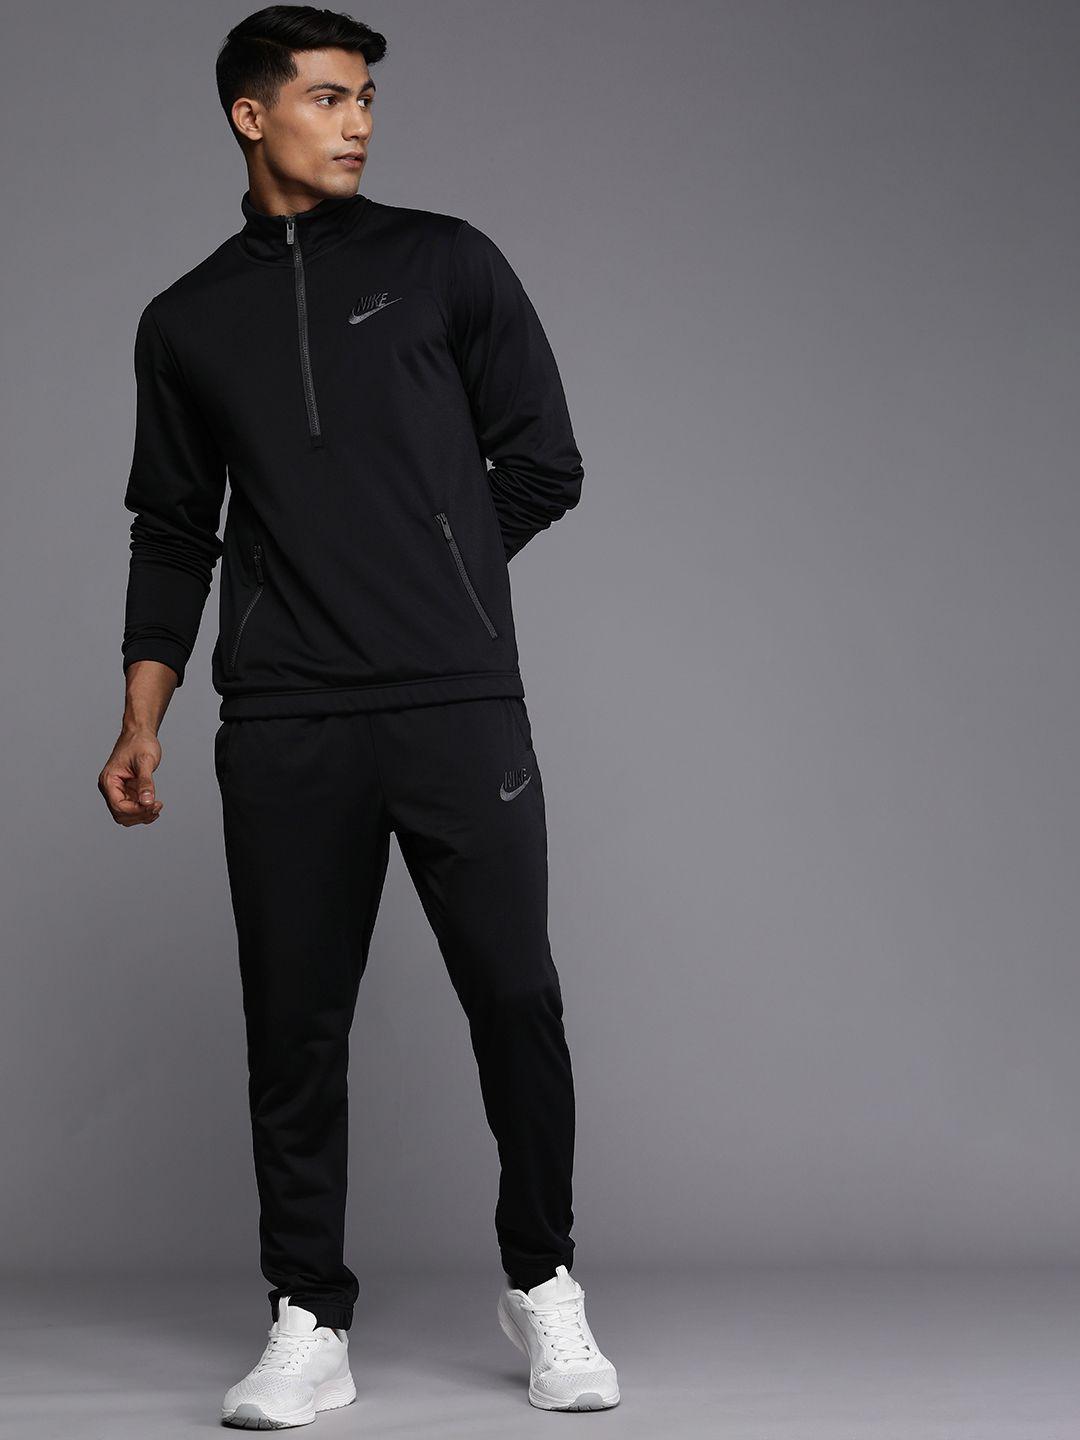 nike-men-black-brand-logo-printed-poly-knit-track-suit